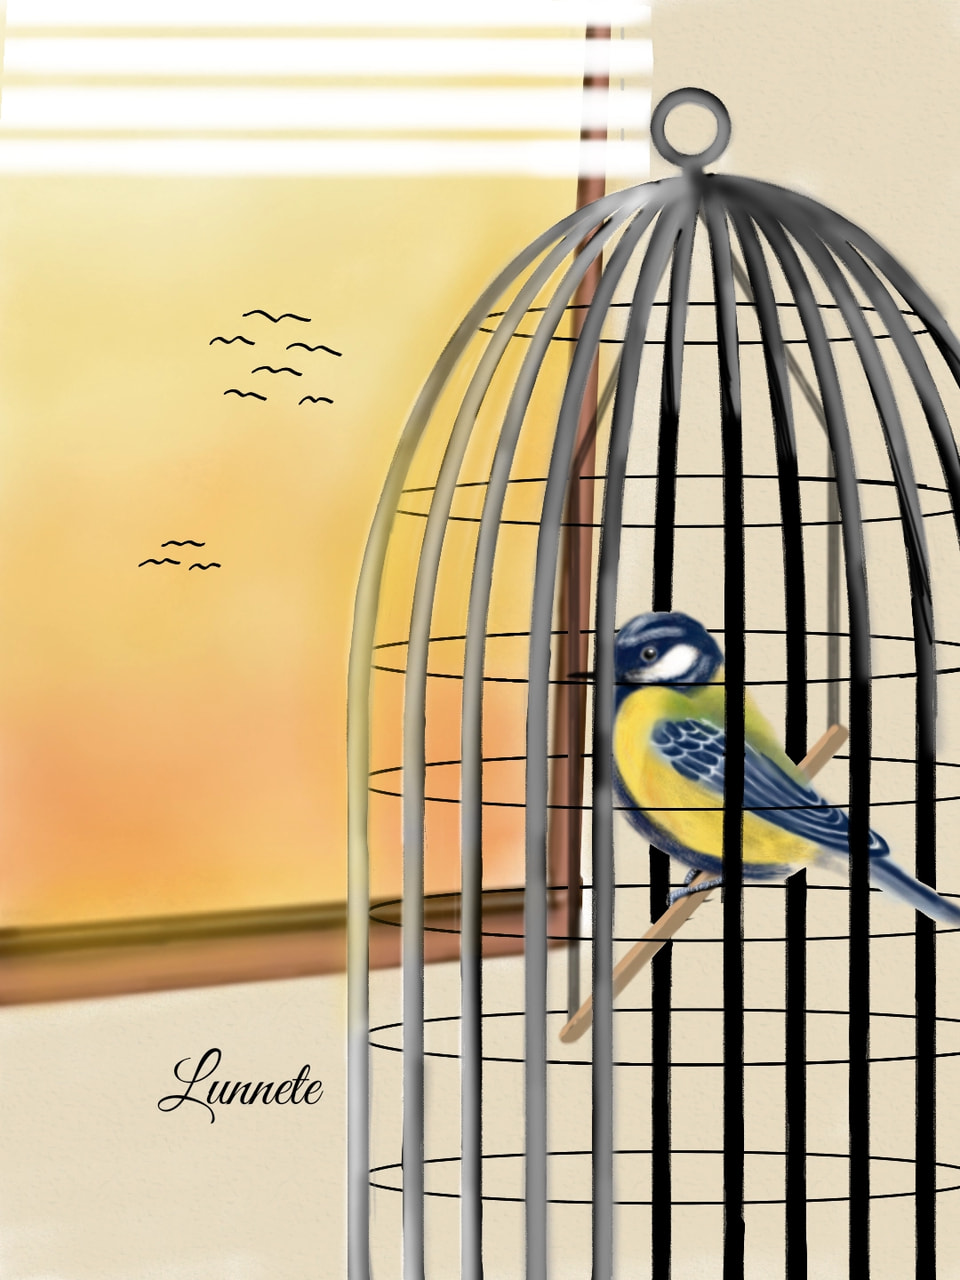 Day 11. I dont like seeing birds in cages. #inktober #inktober2018 #lunytober2018 #cruel #100PercentSketch #bird #cage